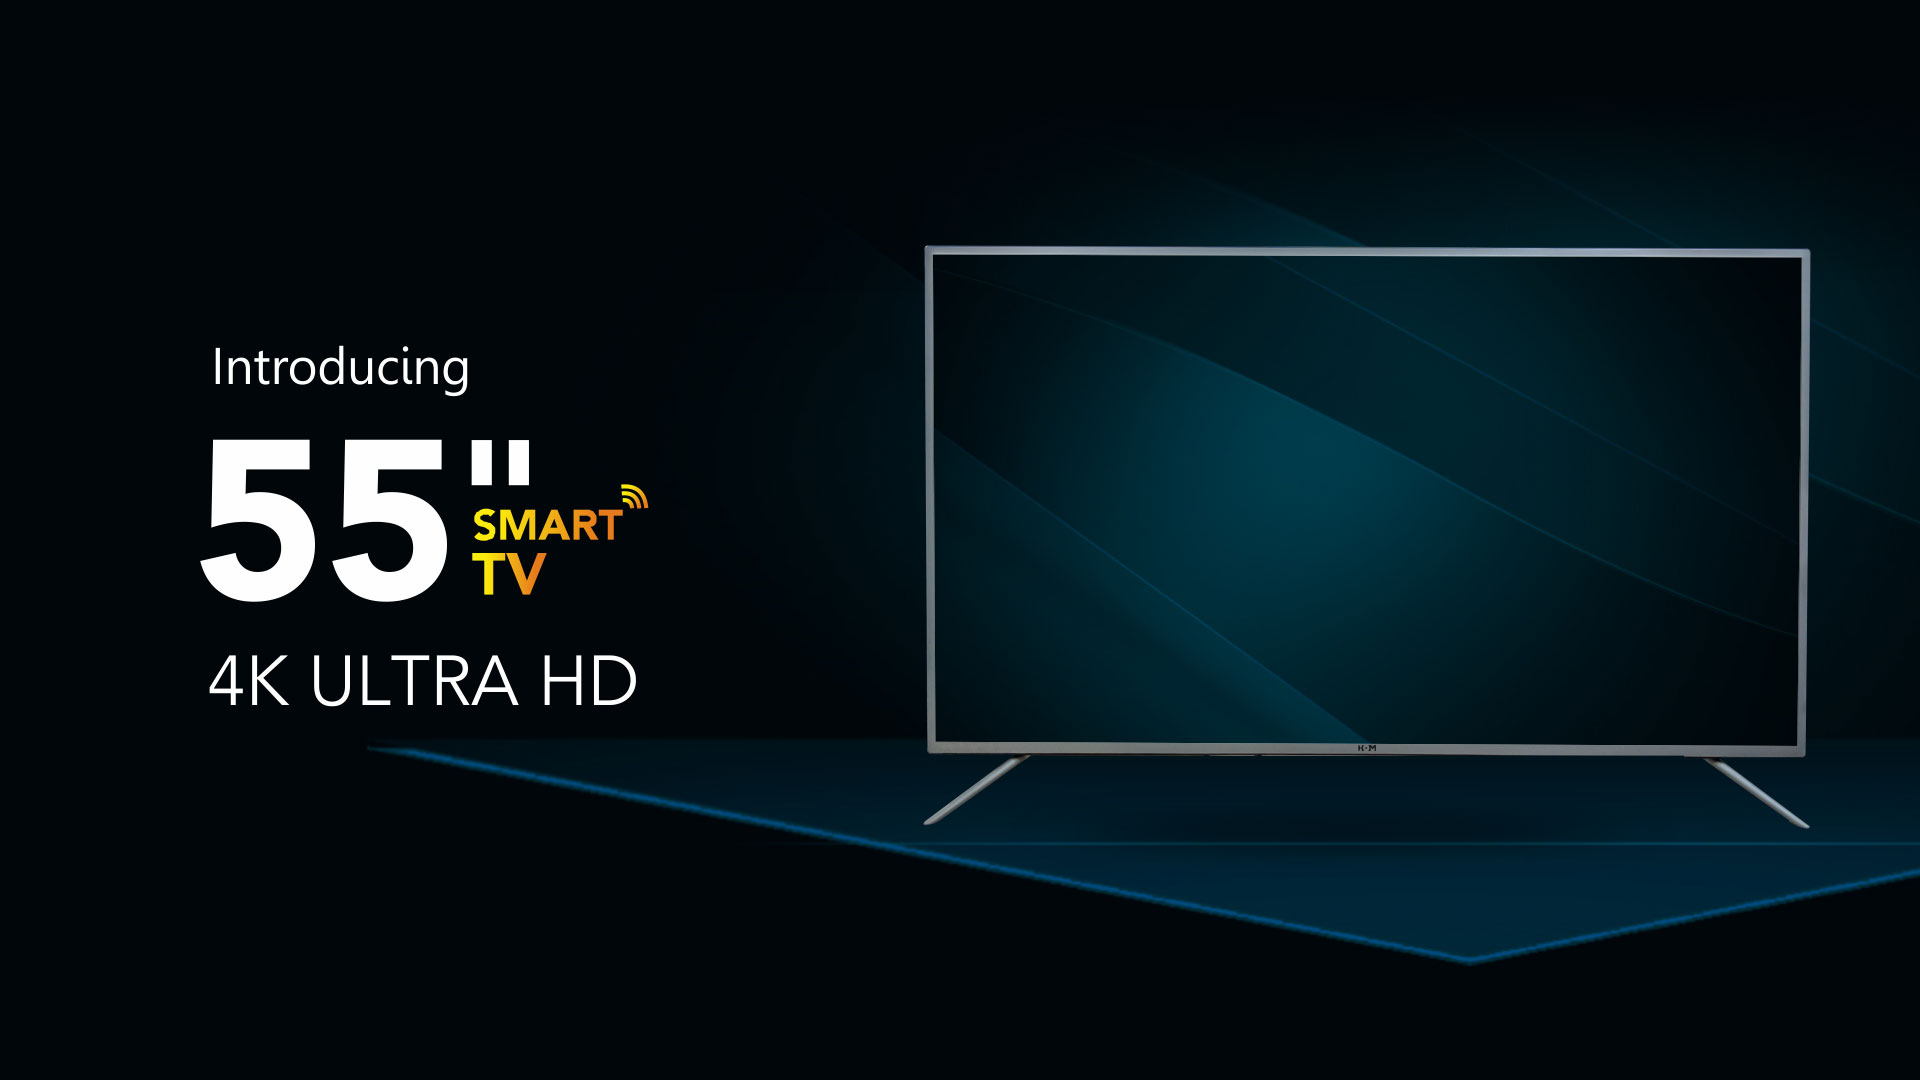 55 inch LED Smart TV